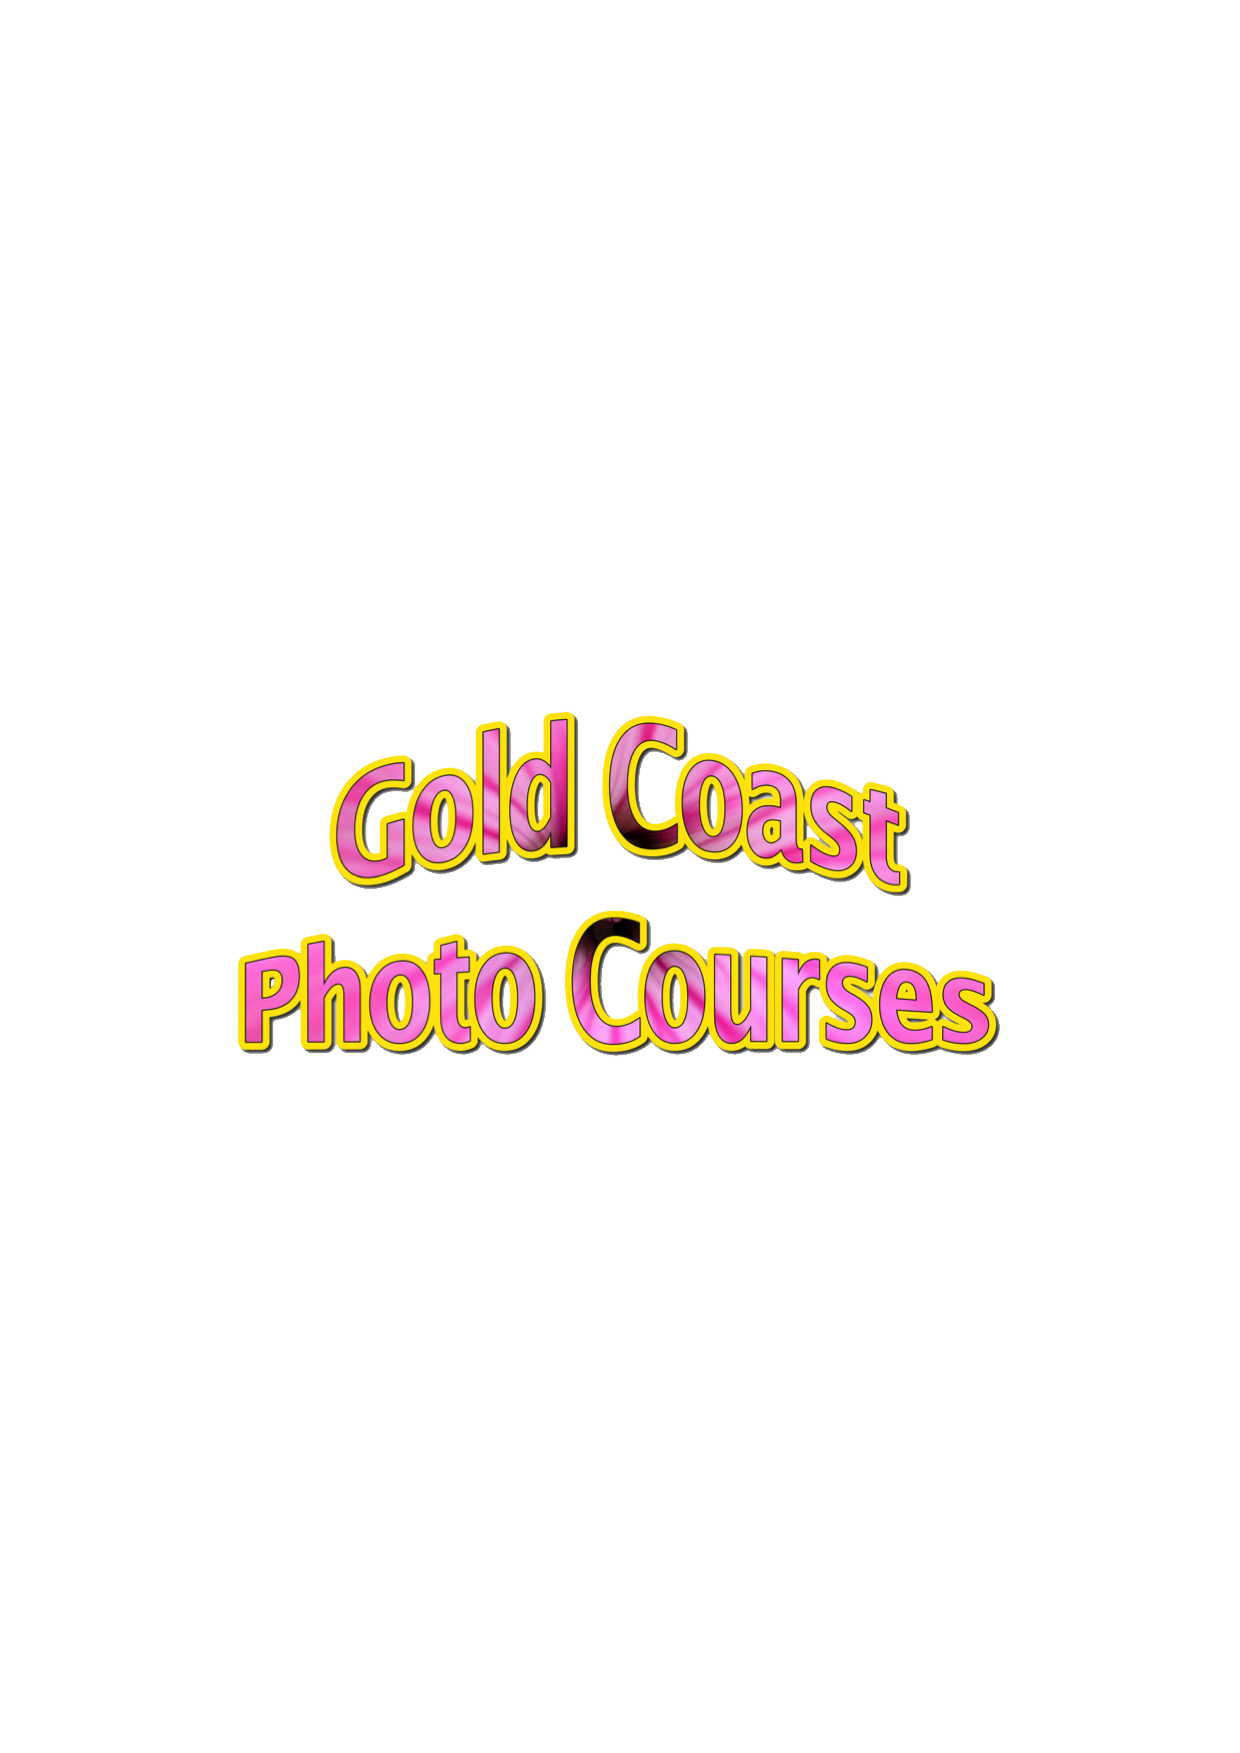 Gold Coast Photography Courses logo